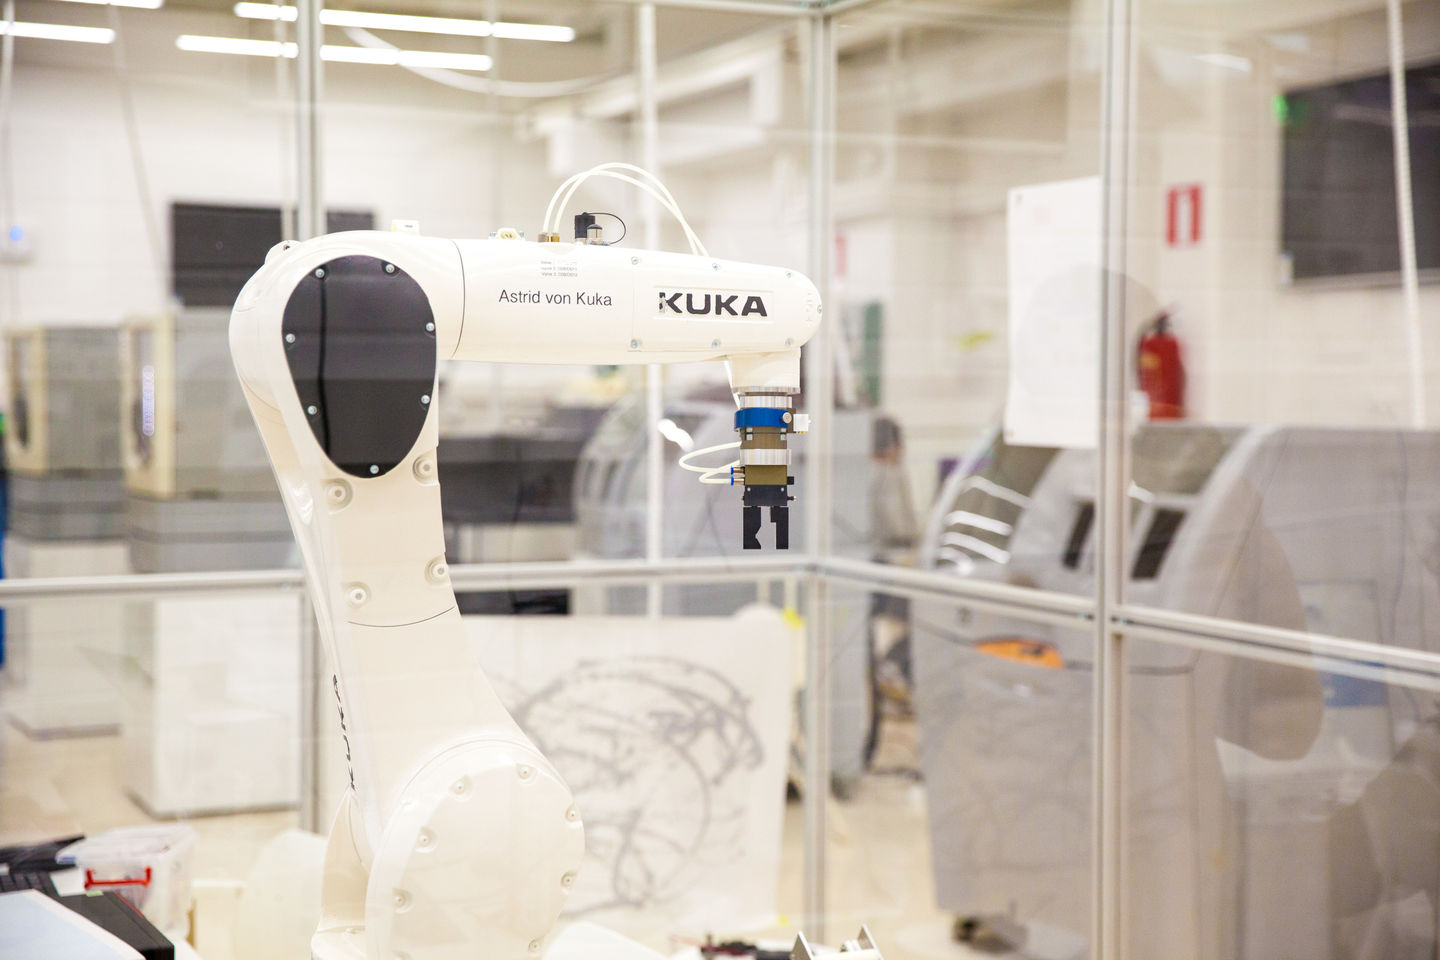 Kuka robot at Aalto University